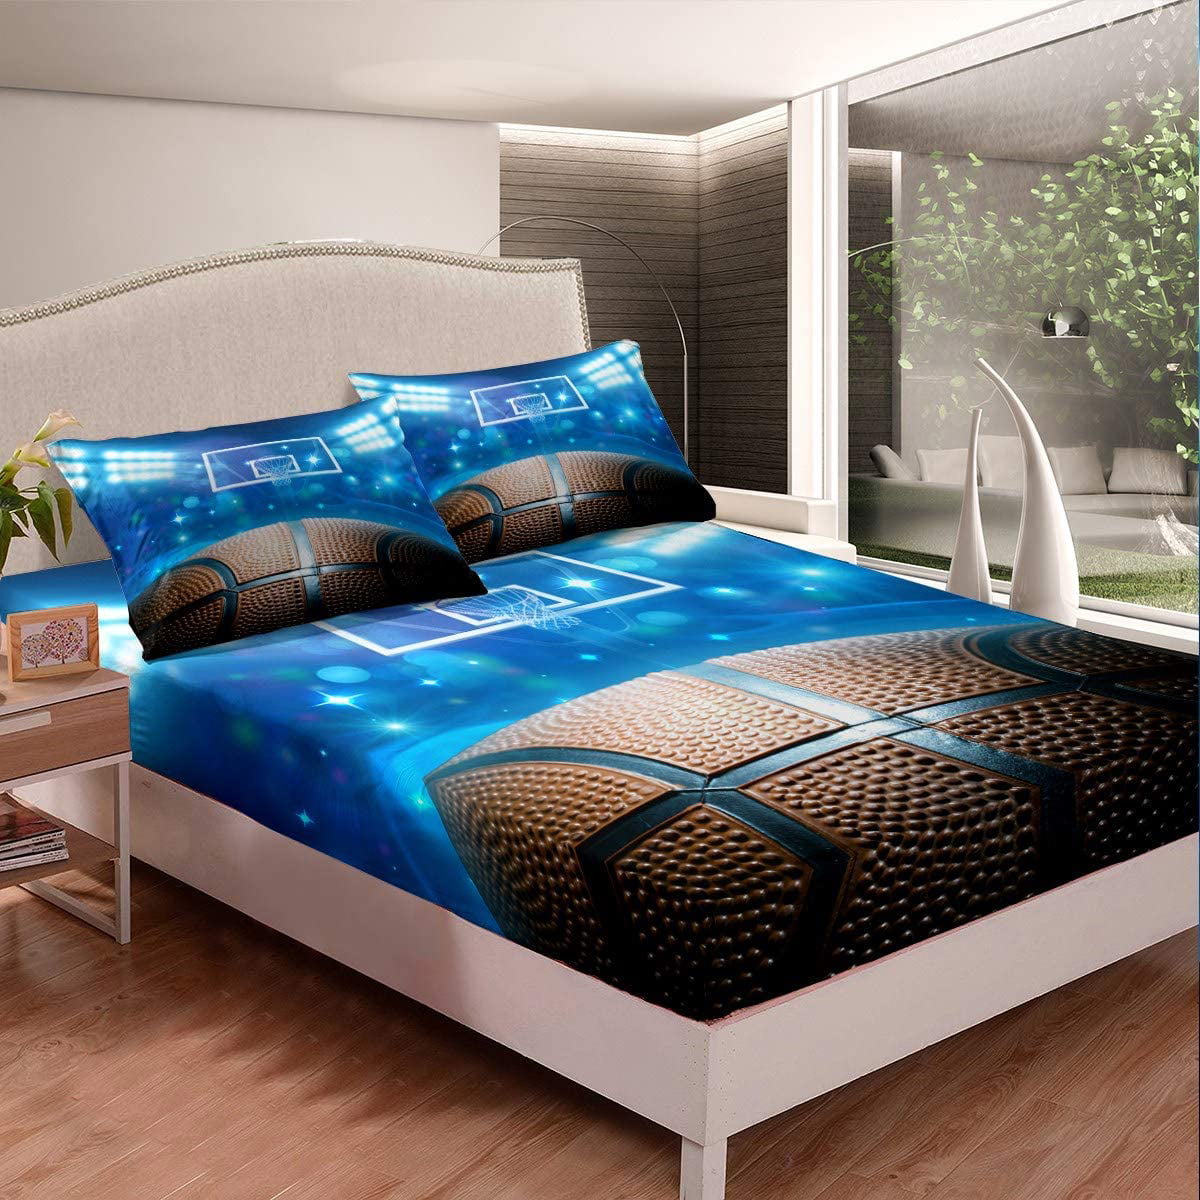 Details about   Cozy Bedding Sheet Set 4 PCs OR 6 PCs Egyptian Cotton US Full XL Size All Color 